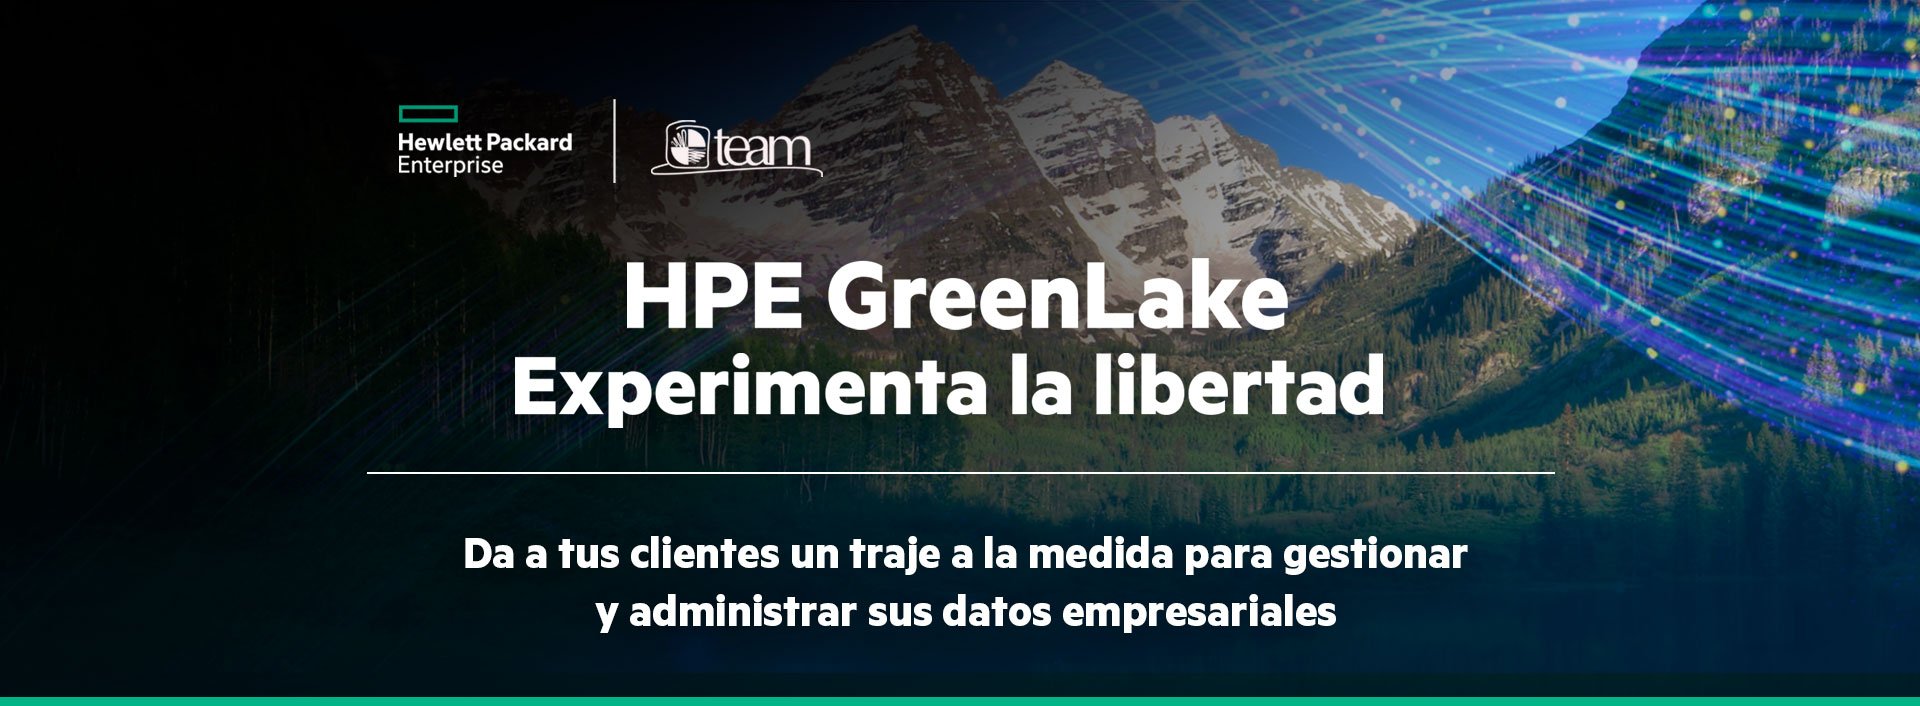 HPE Greenlake - Experimenta la libertad